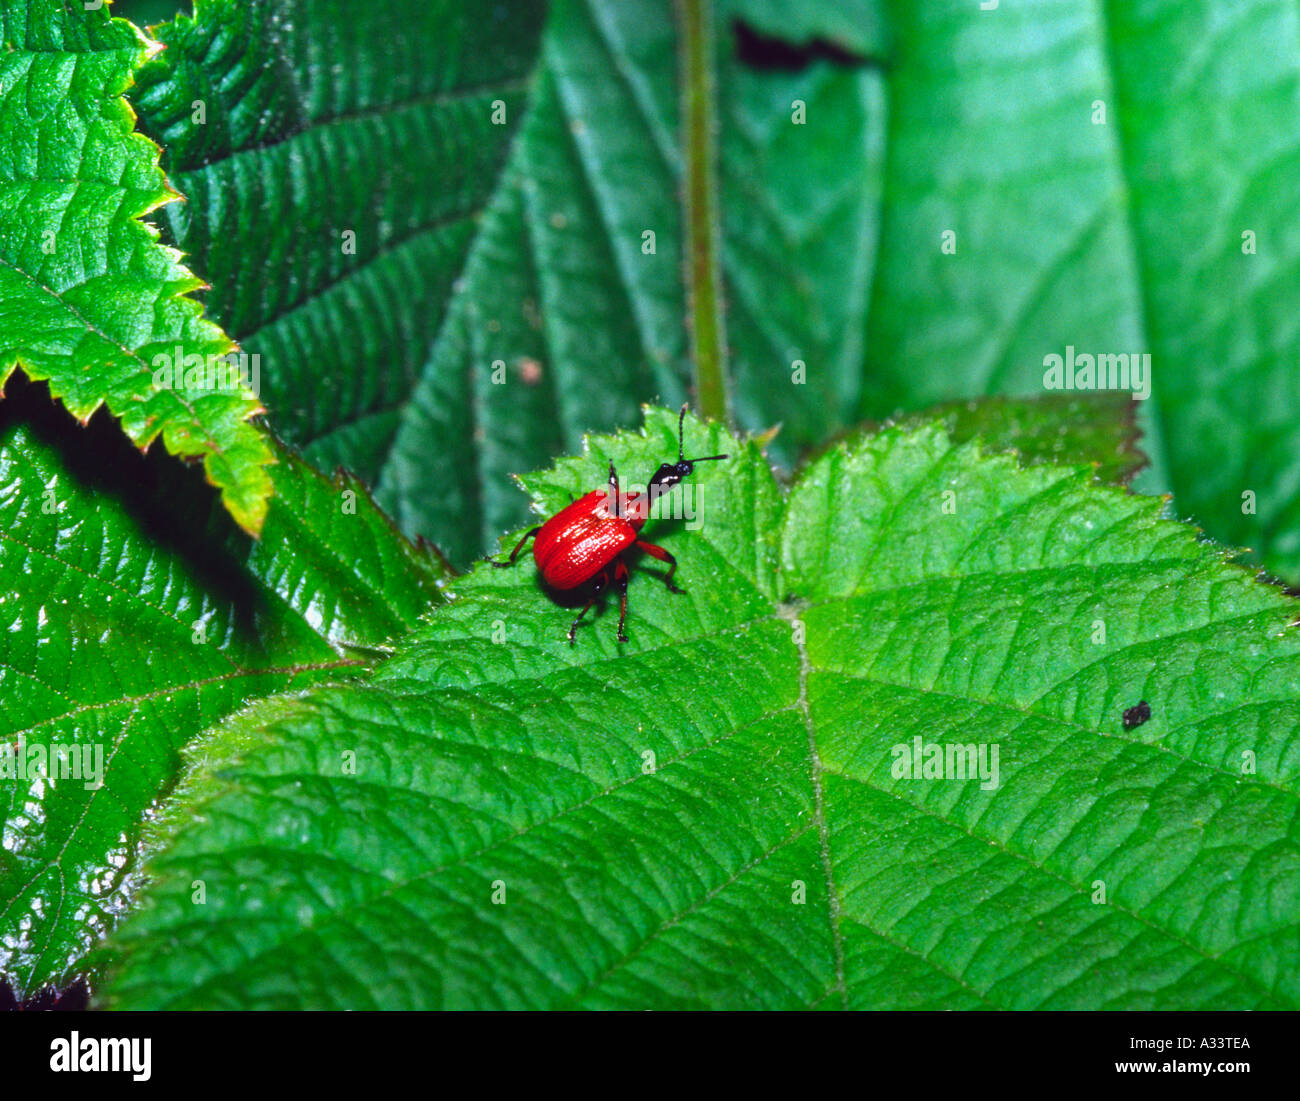 Leaf roller beetle Stock Photo